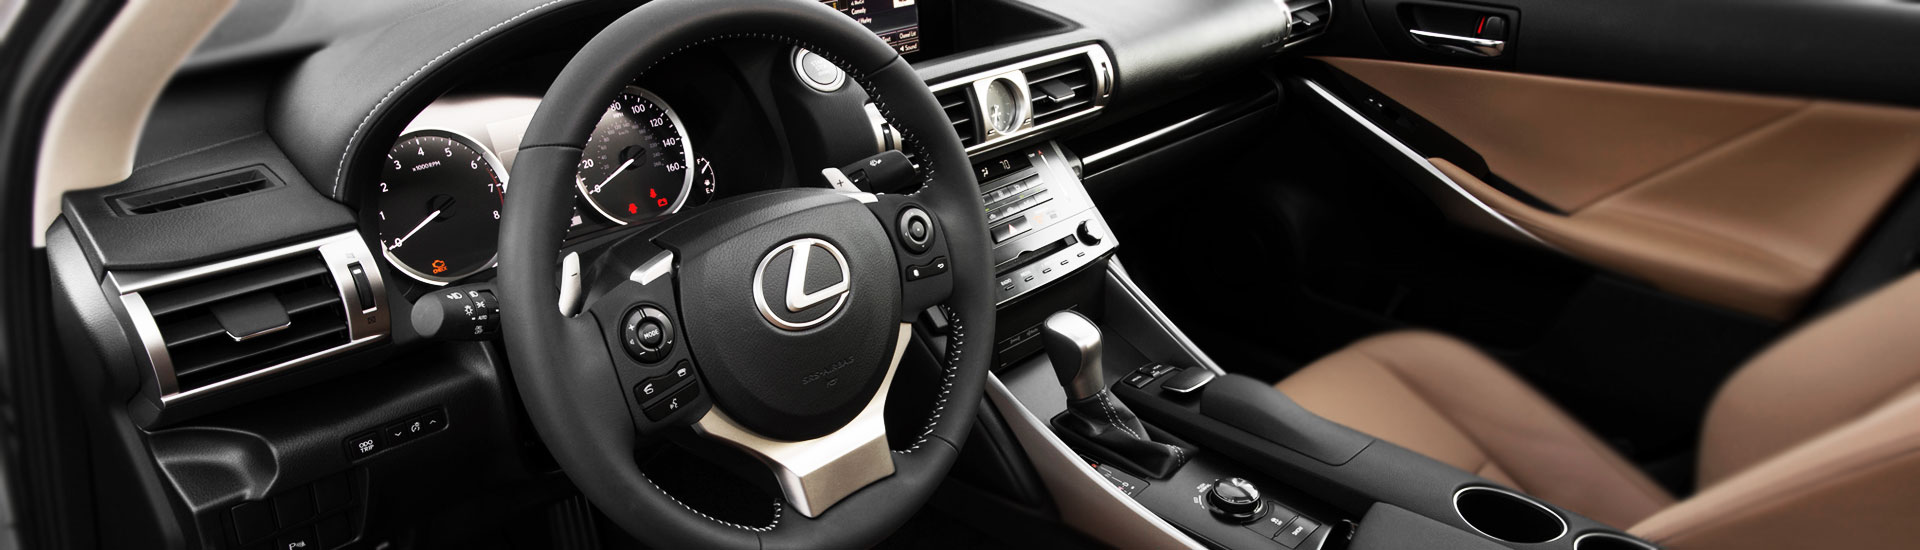 Lexus IS Custom Dash Kits